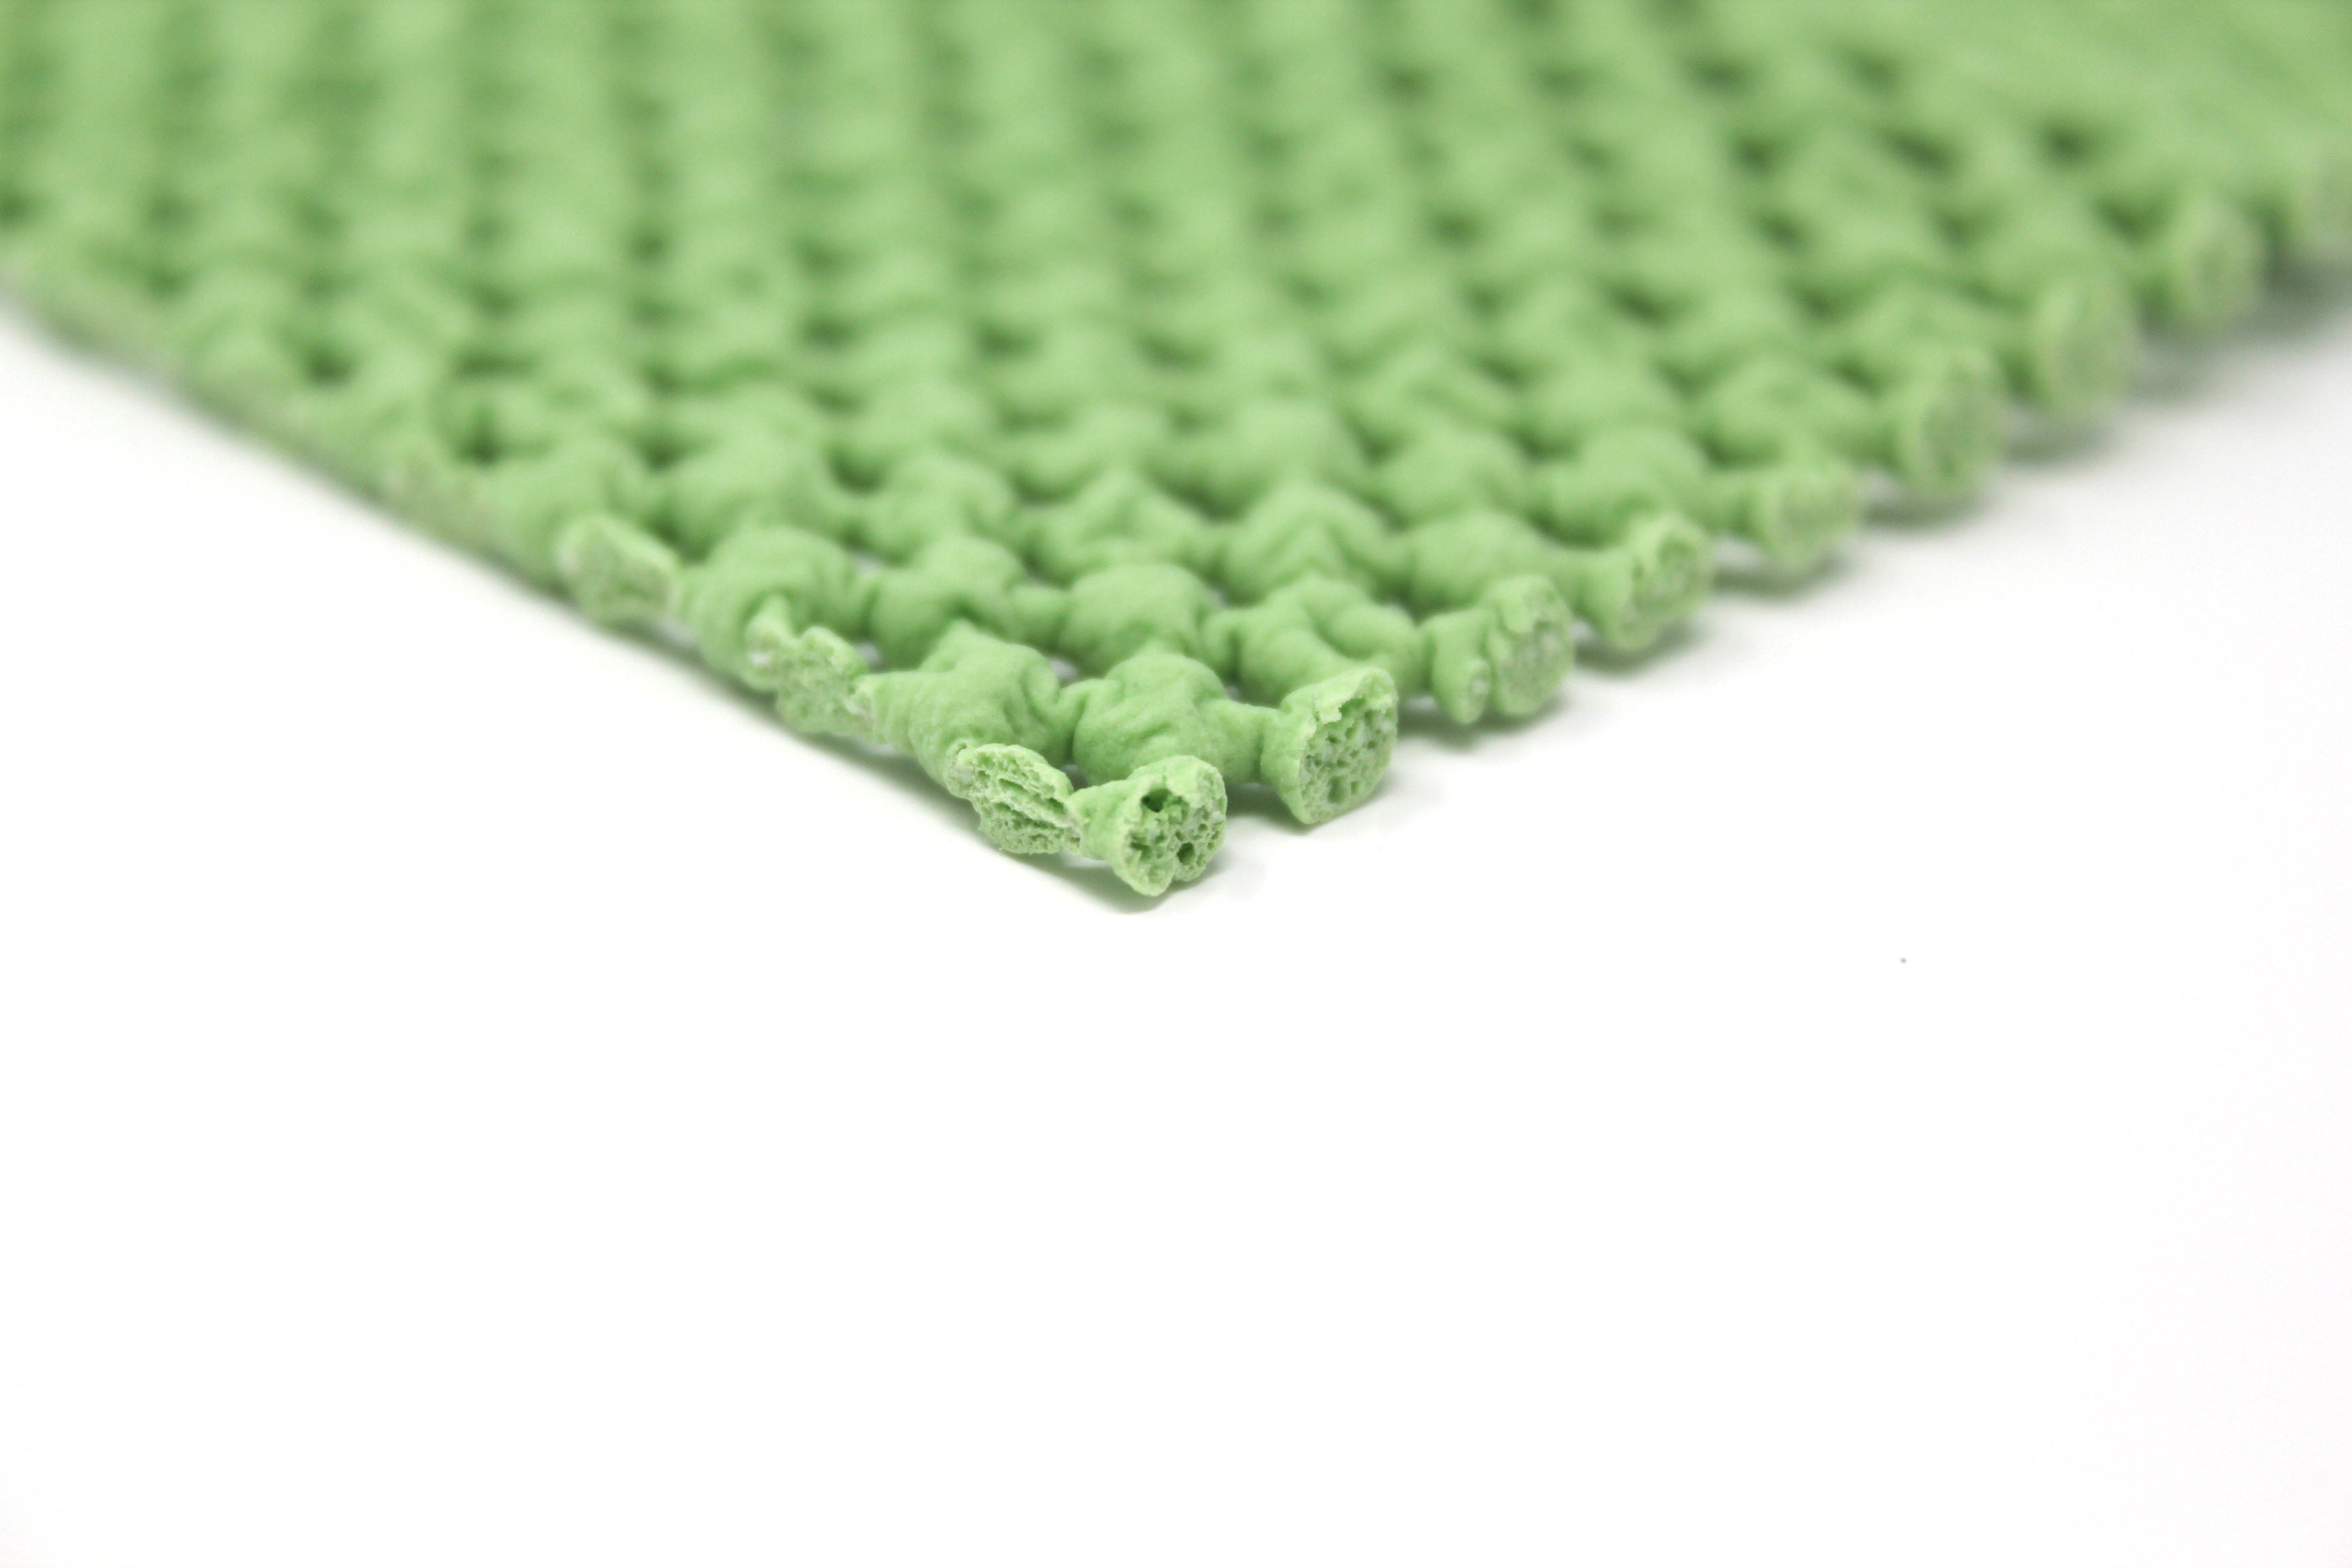 Non-slip mat for cutting boards 150x30 cm